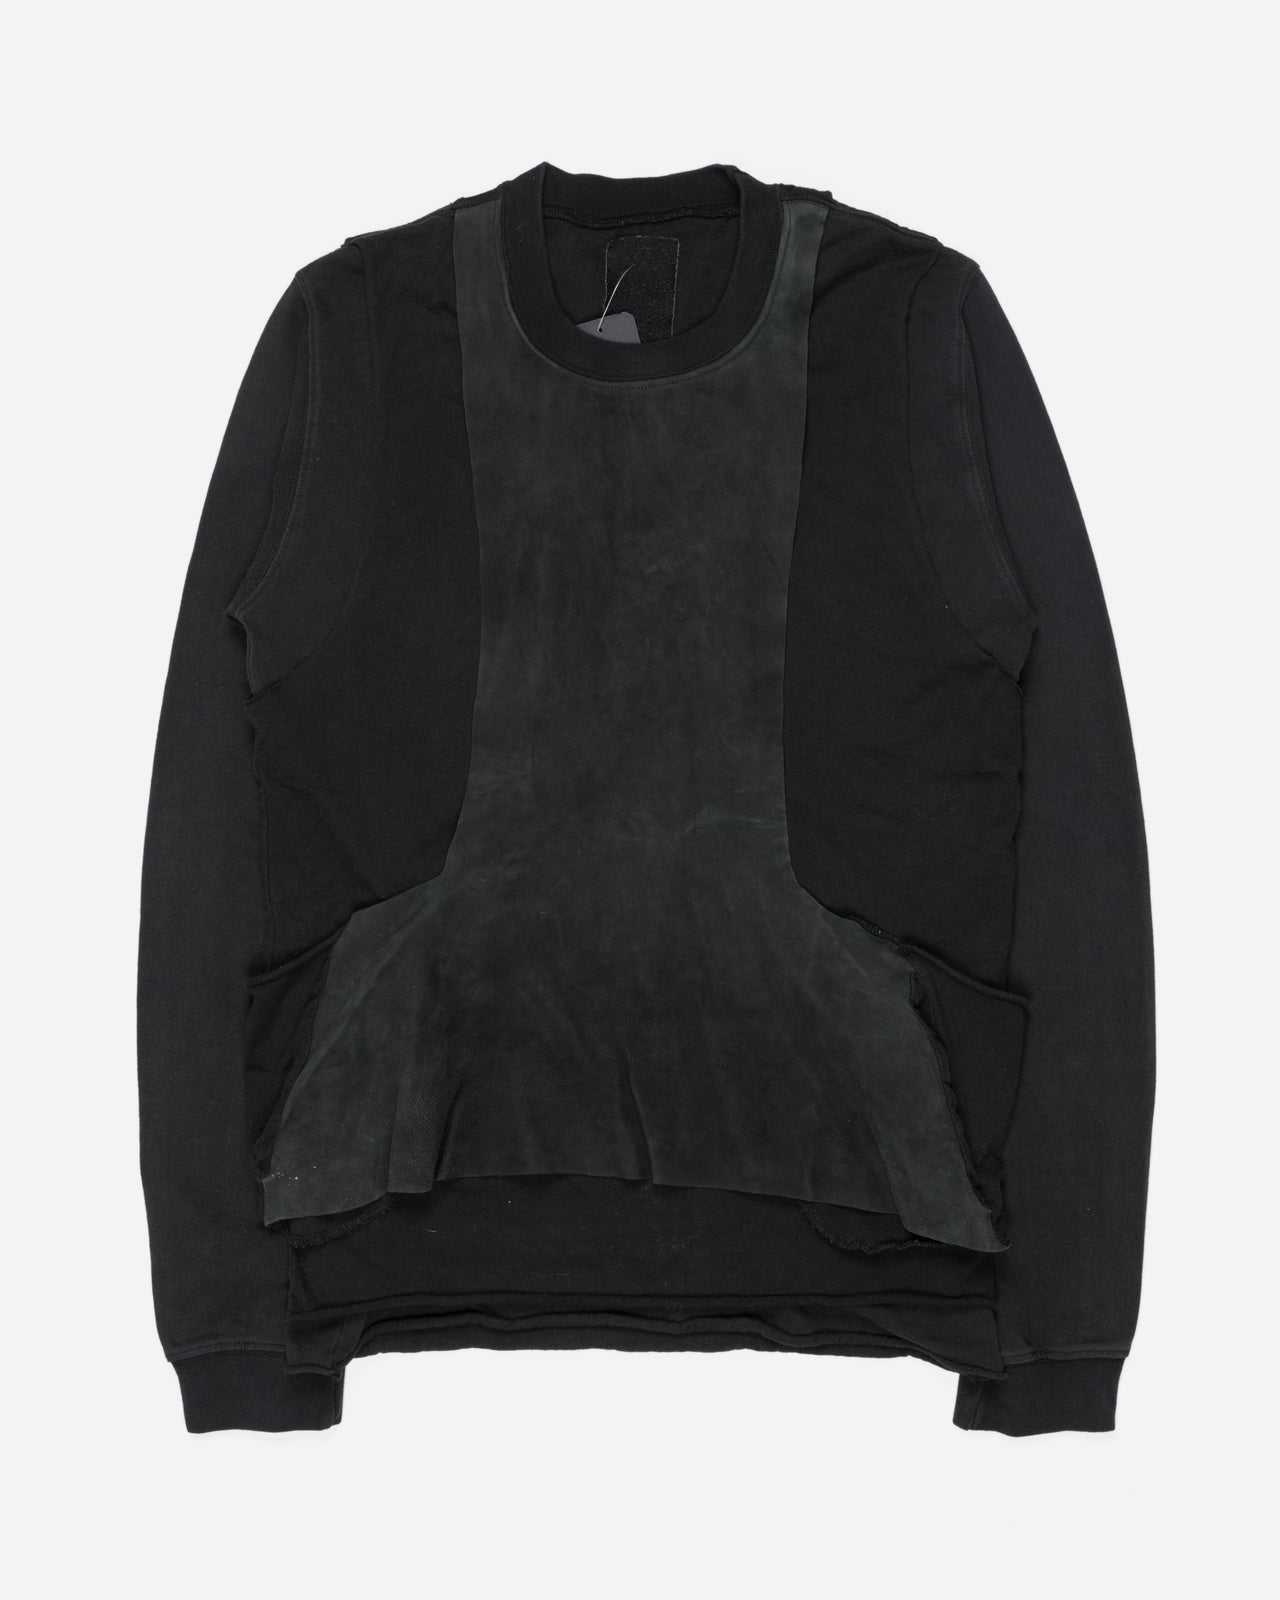 Rick Owens “Slab” Leather Paneled Crewneck Sweatshirt - 2000s